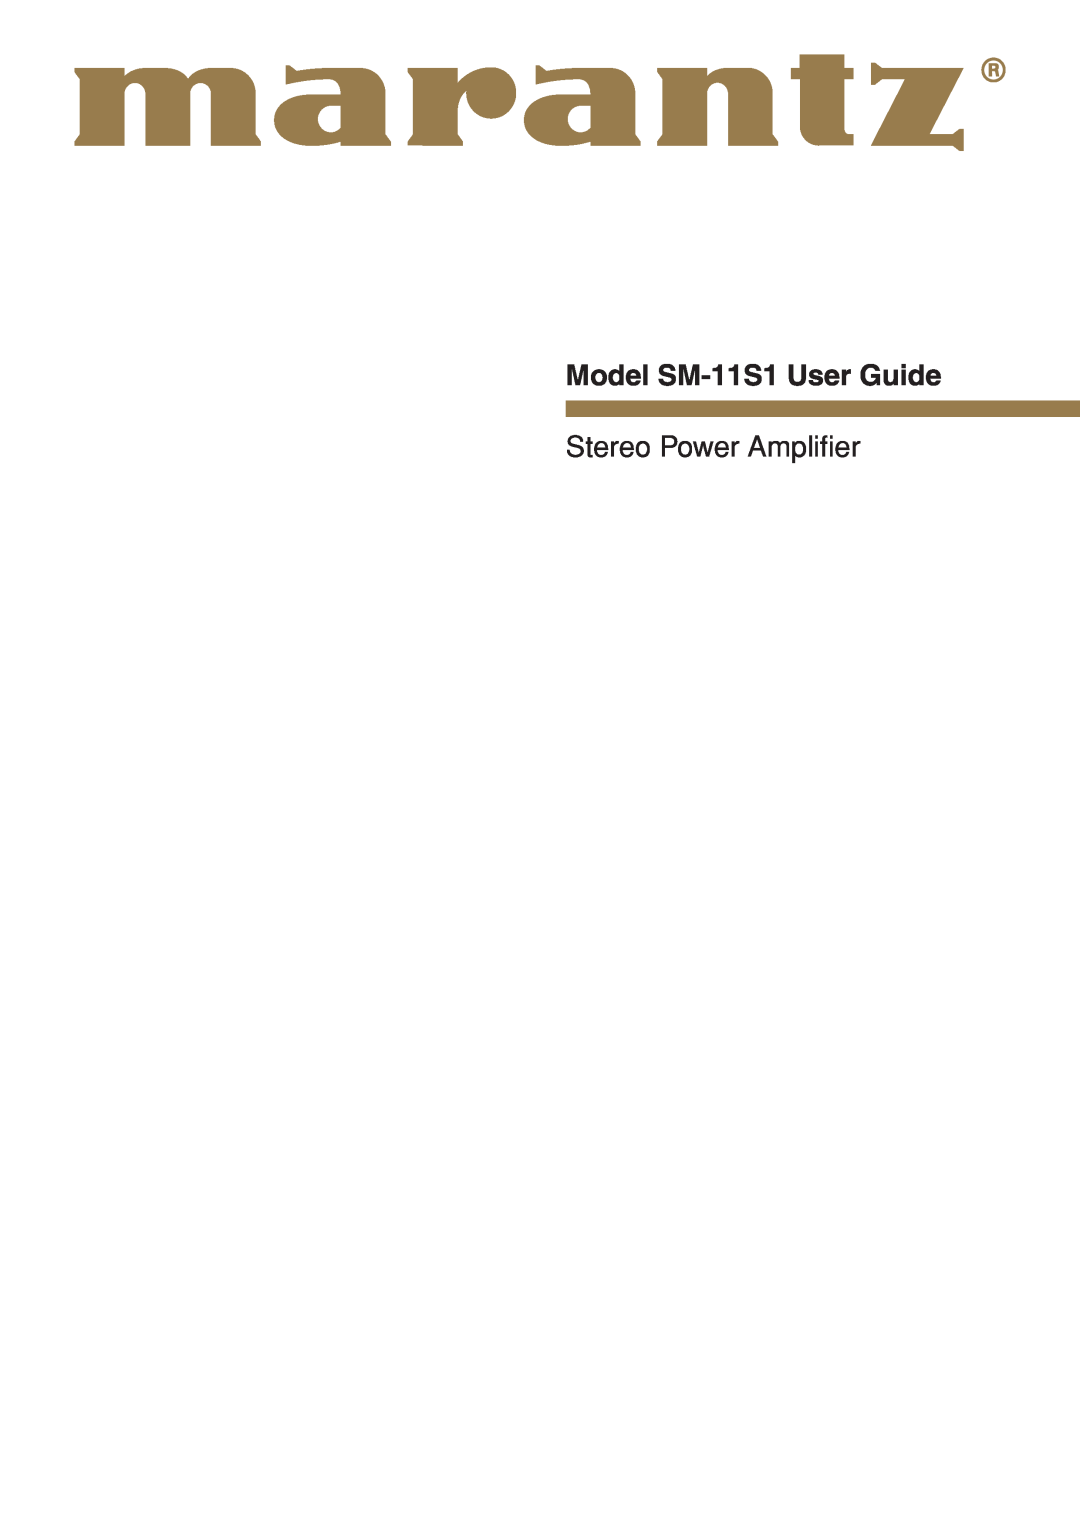 Marantz SM-1151 manual Model SM-11S1User Guide, Stereo Power Ampliﬁer 